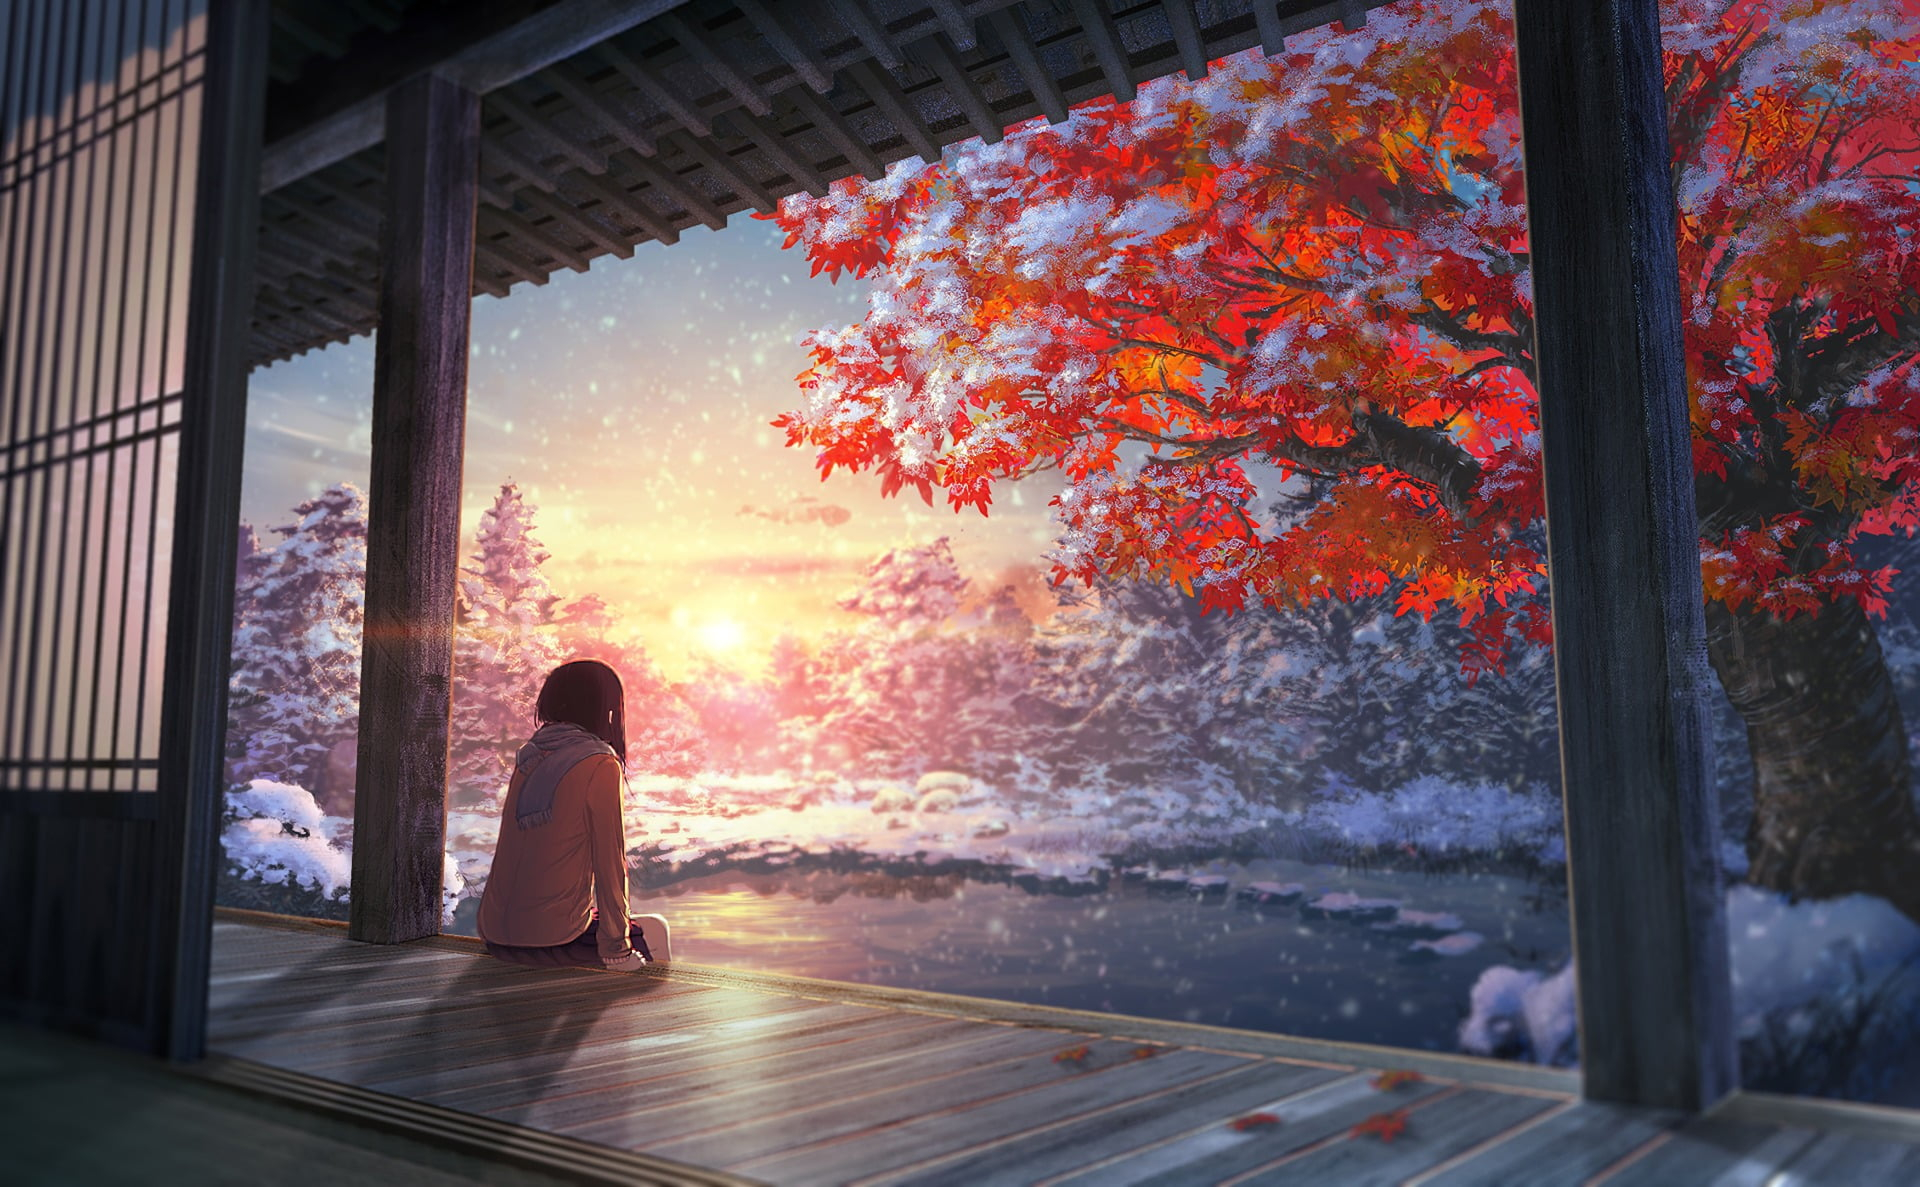 Anime Wallpaper, Anime Girls, Artwork, Tree, One Person, Rear View, Nature  - Wallpaperforu